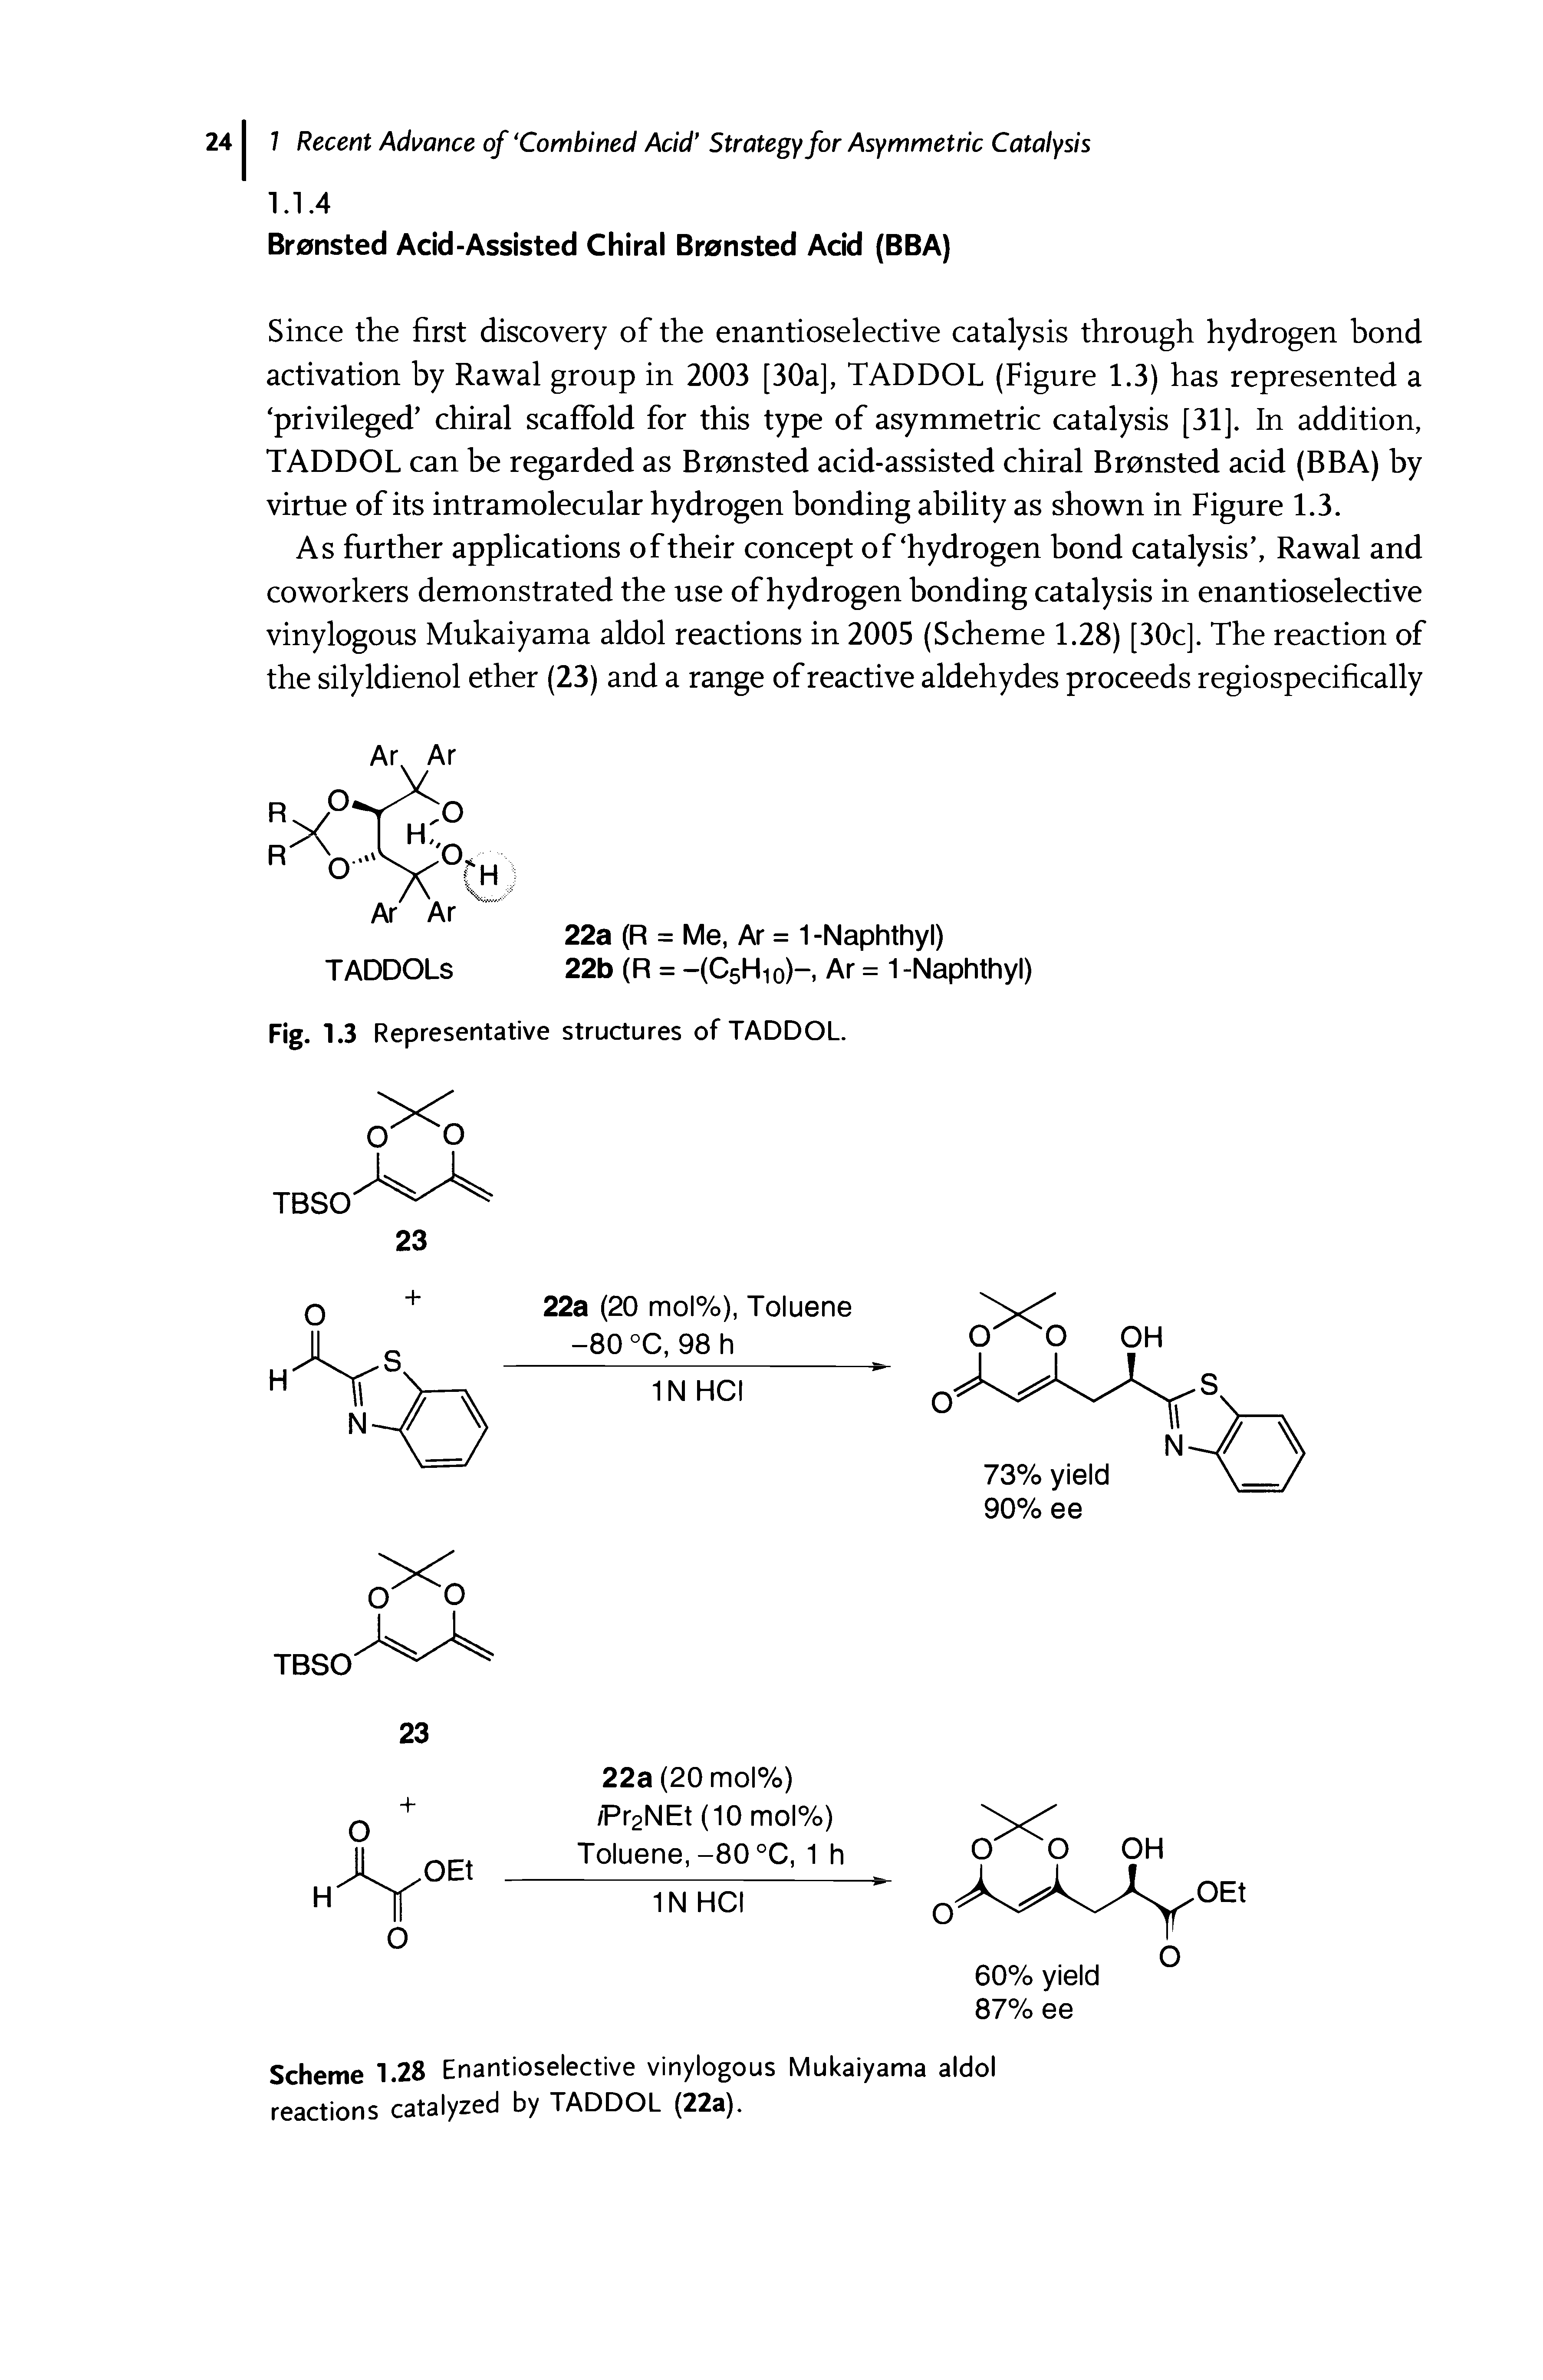 Scheme 1.28 Enantioselective vinylogous Mukaiyama aldol reactions catalyzed by TADDOL (22a).